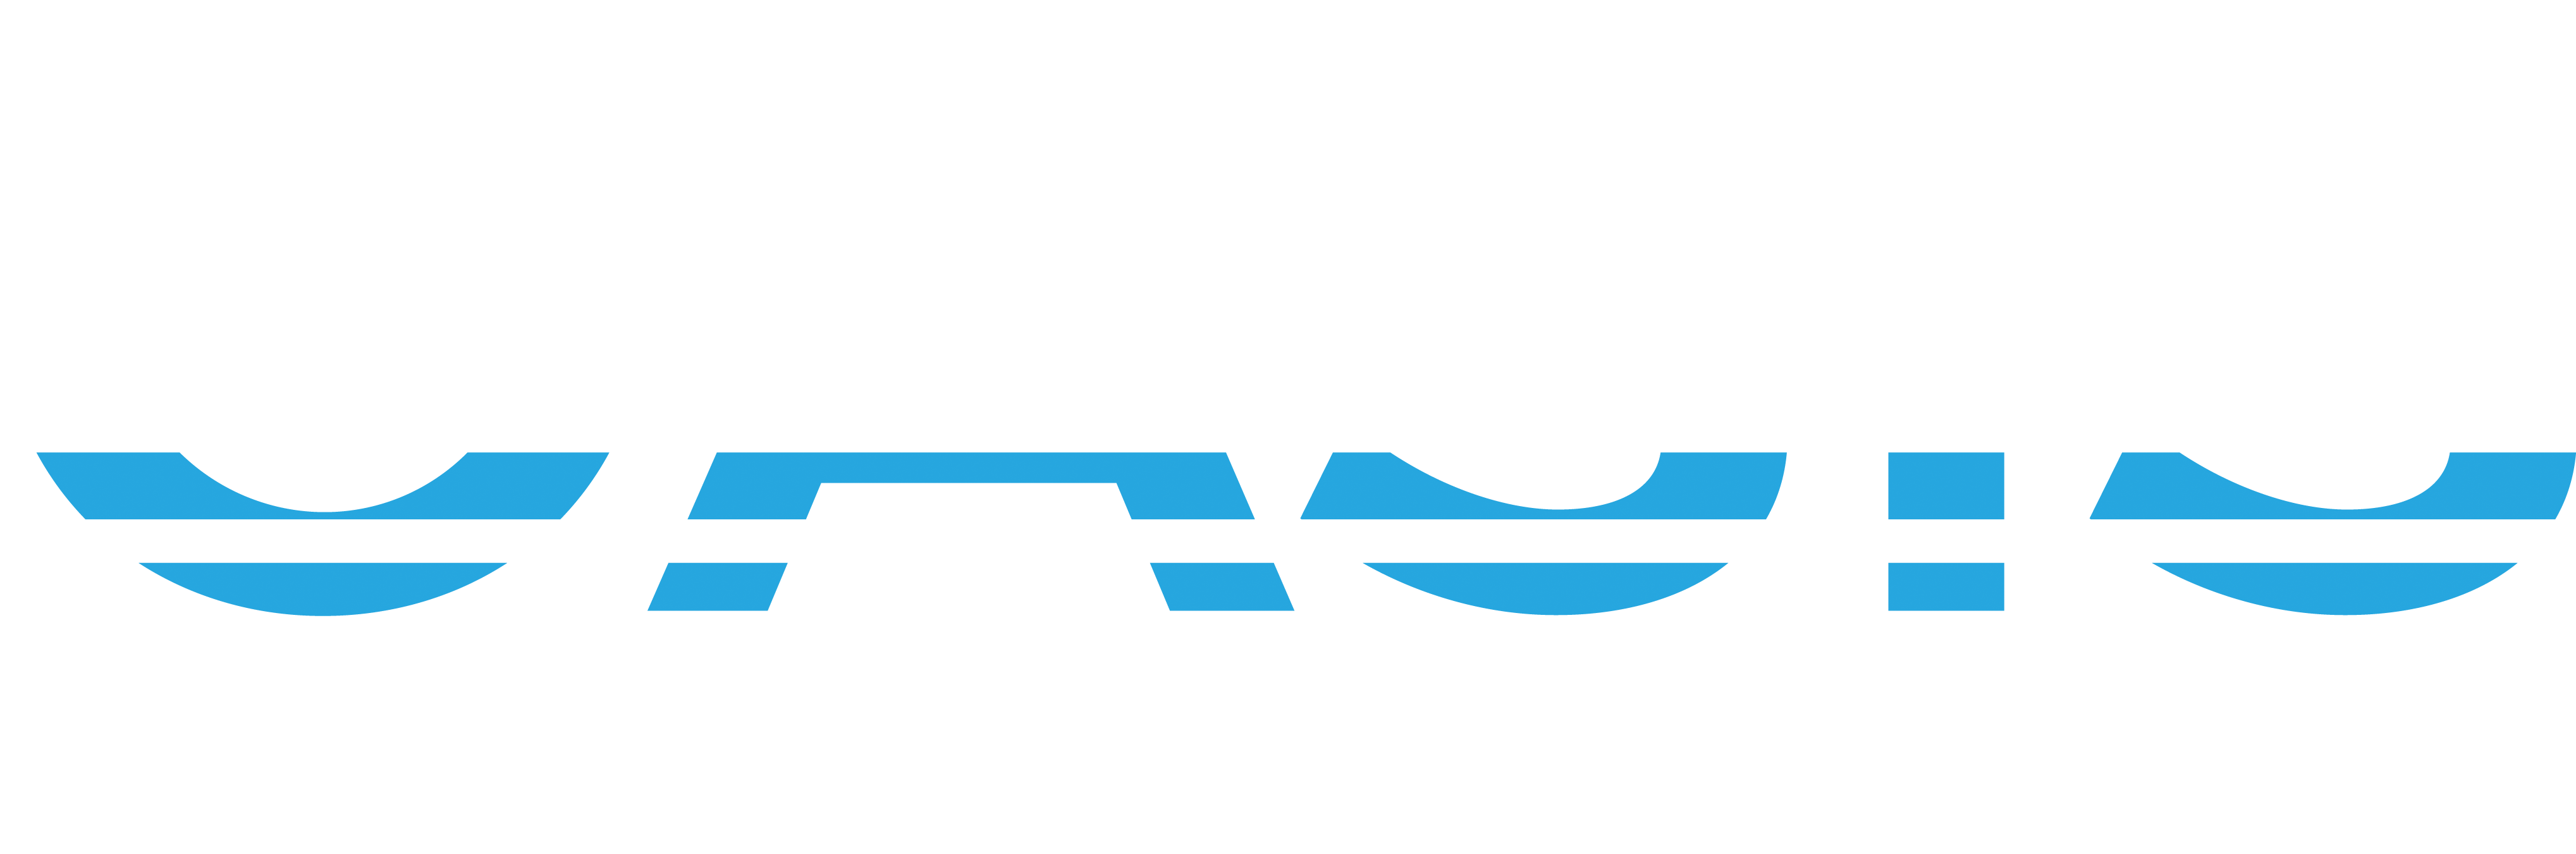 Oasis Church Logo